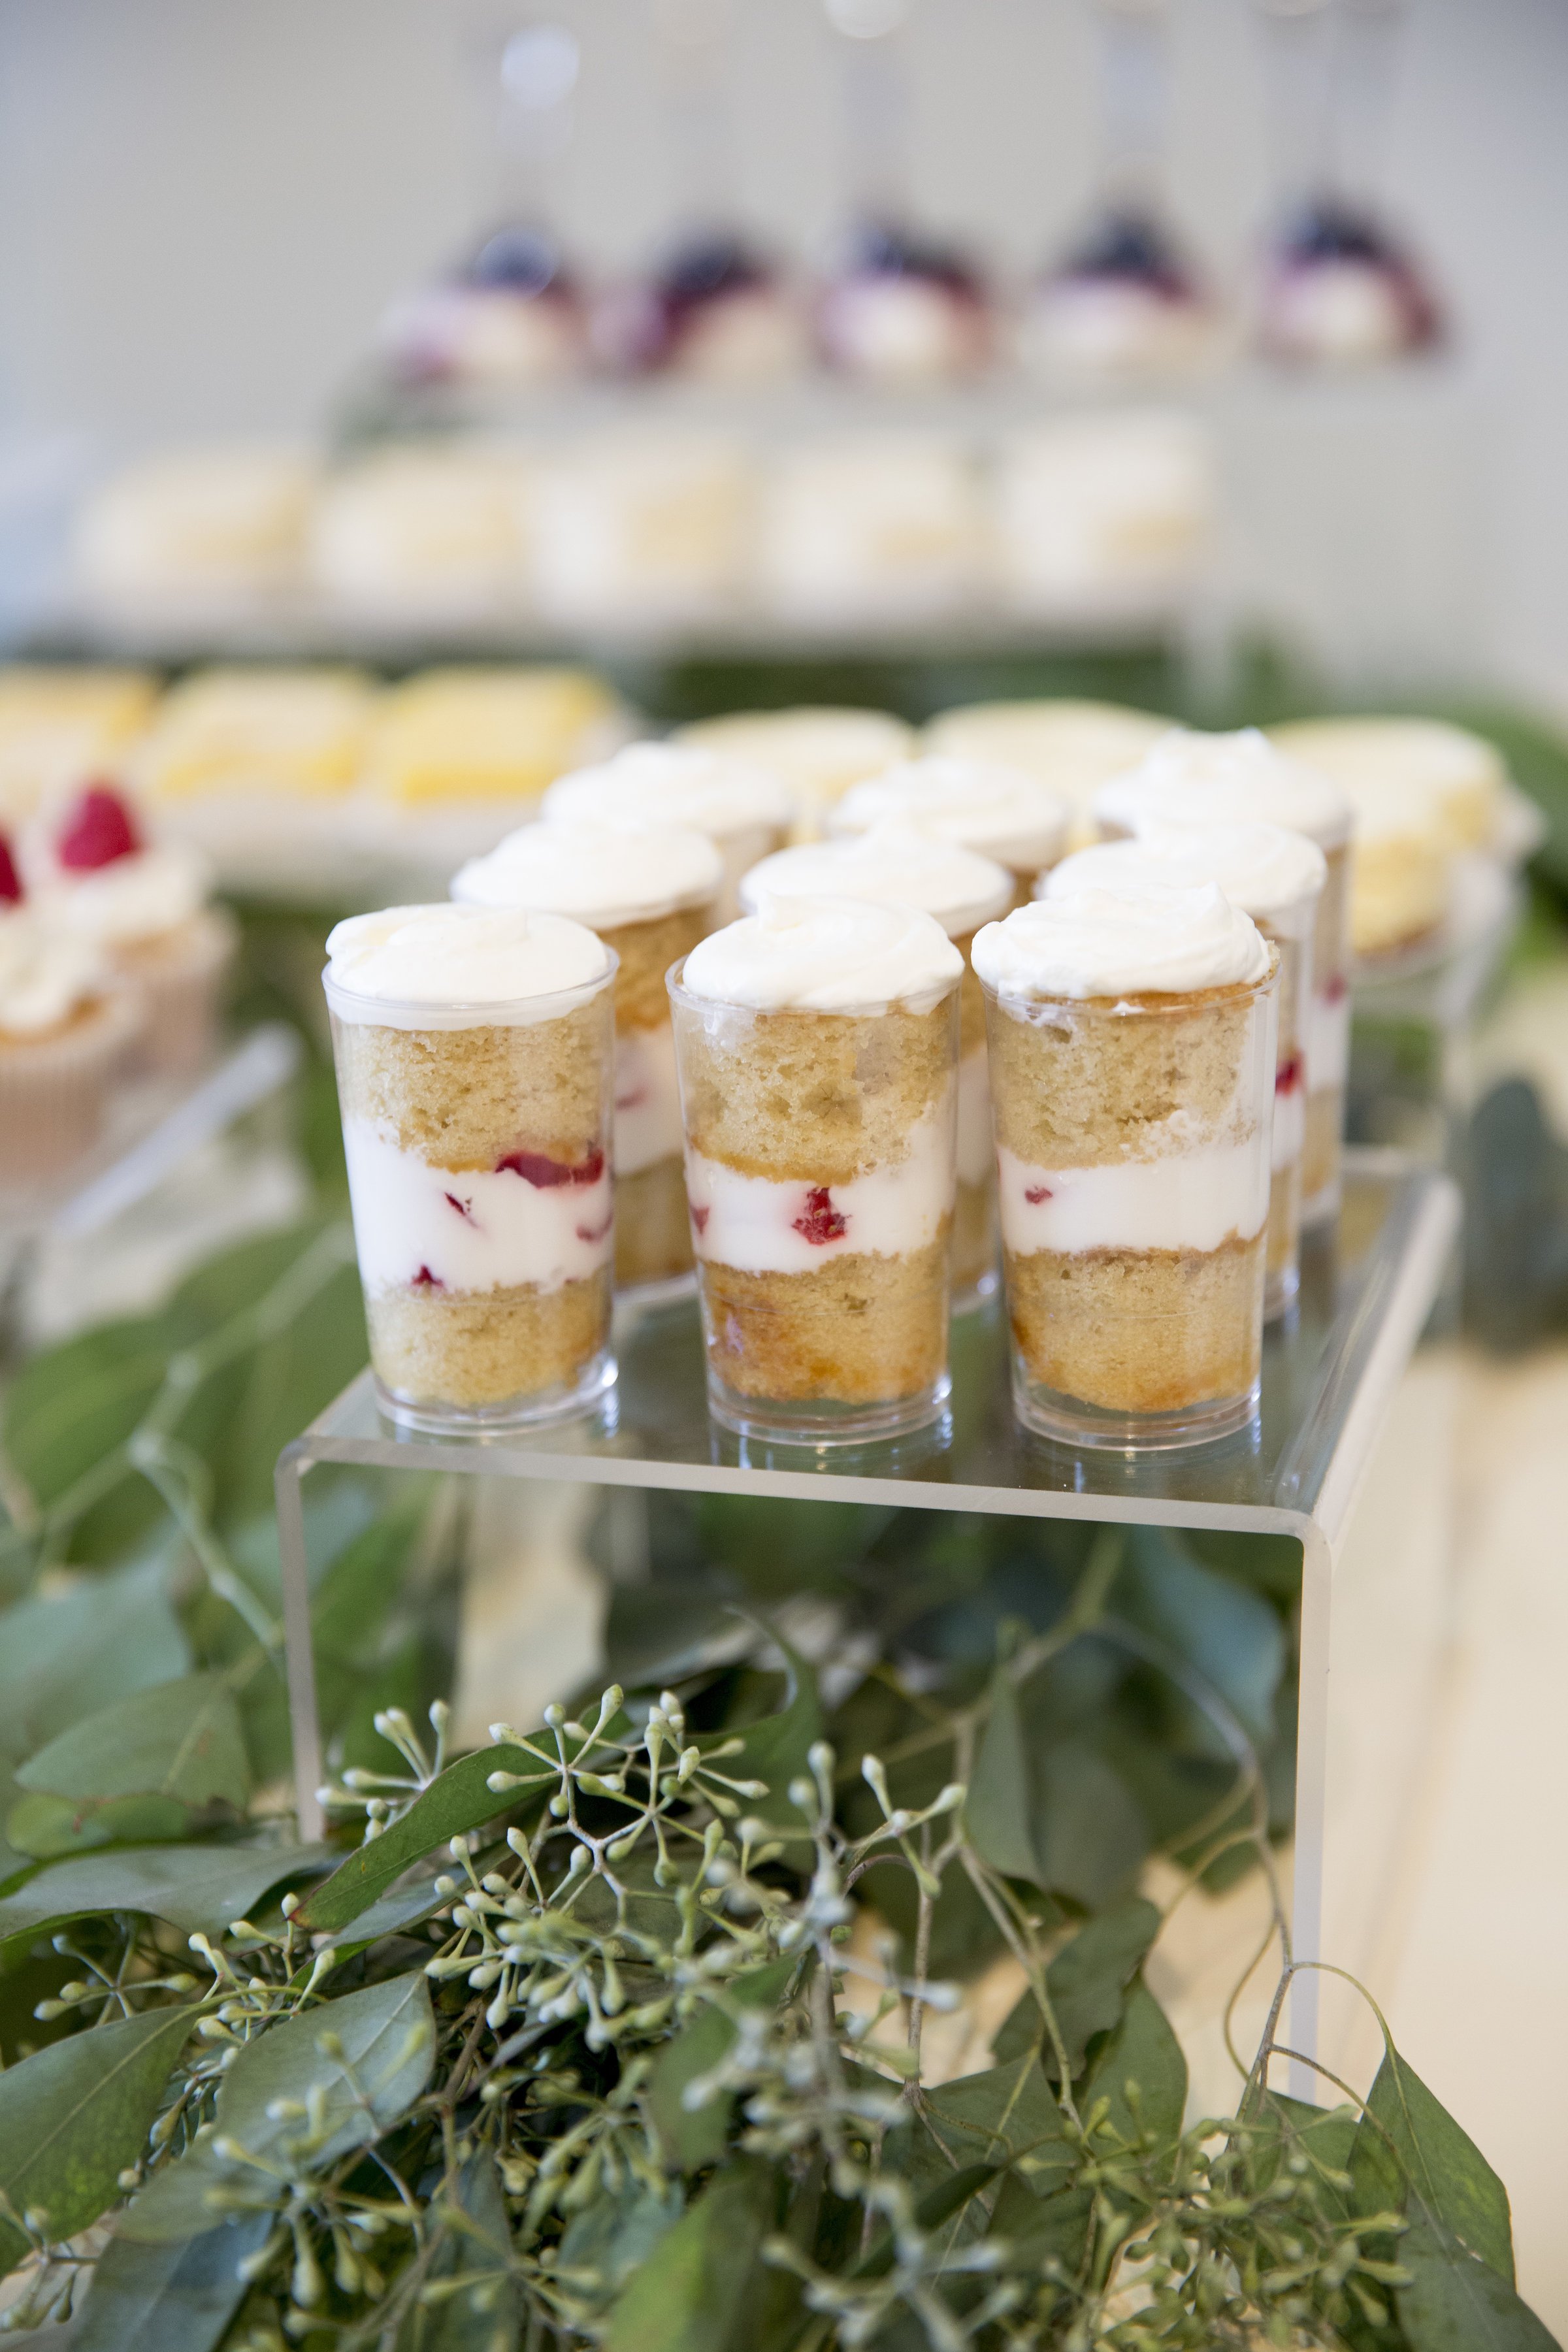 www.santabarbaraweddingstyle | dessert buffet | Dessert ideas | strawberry shortcake | lele patisserie | Kristen Beinke Photography